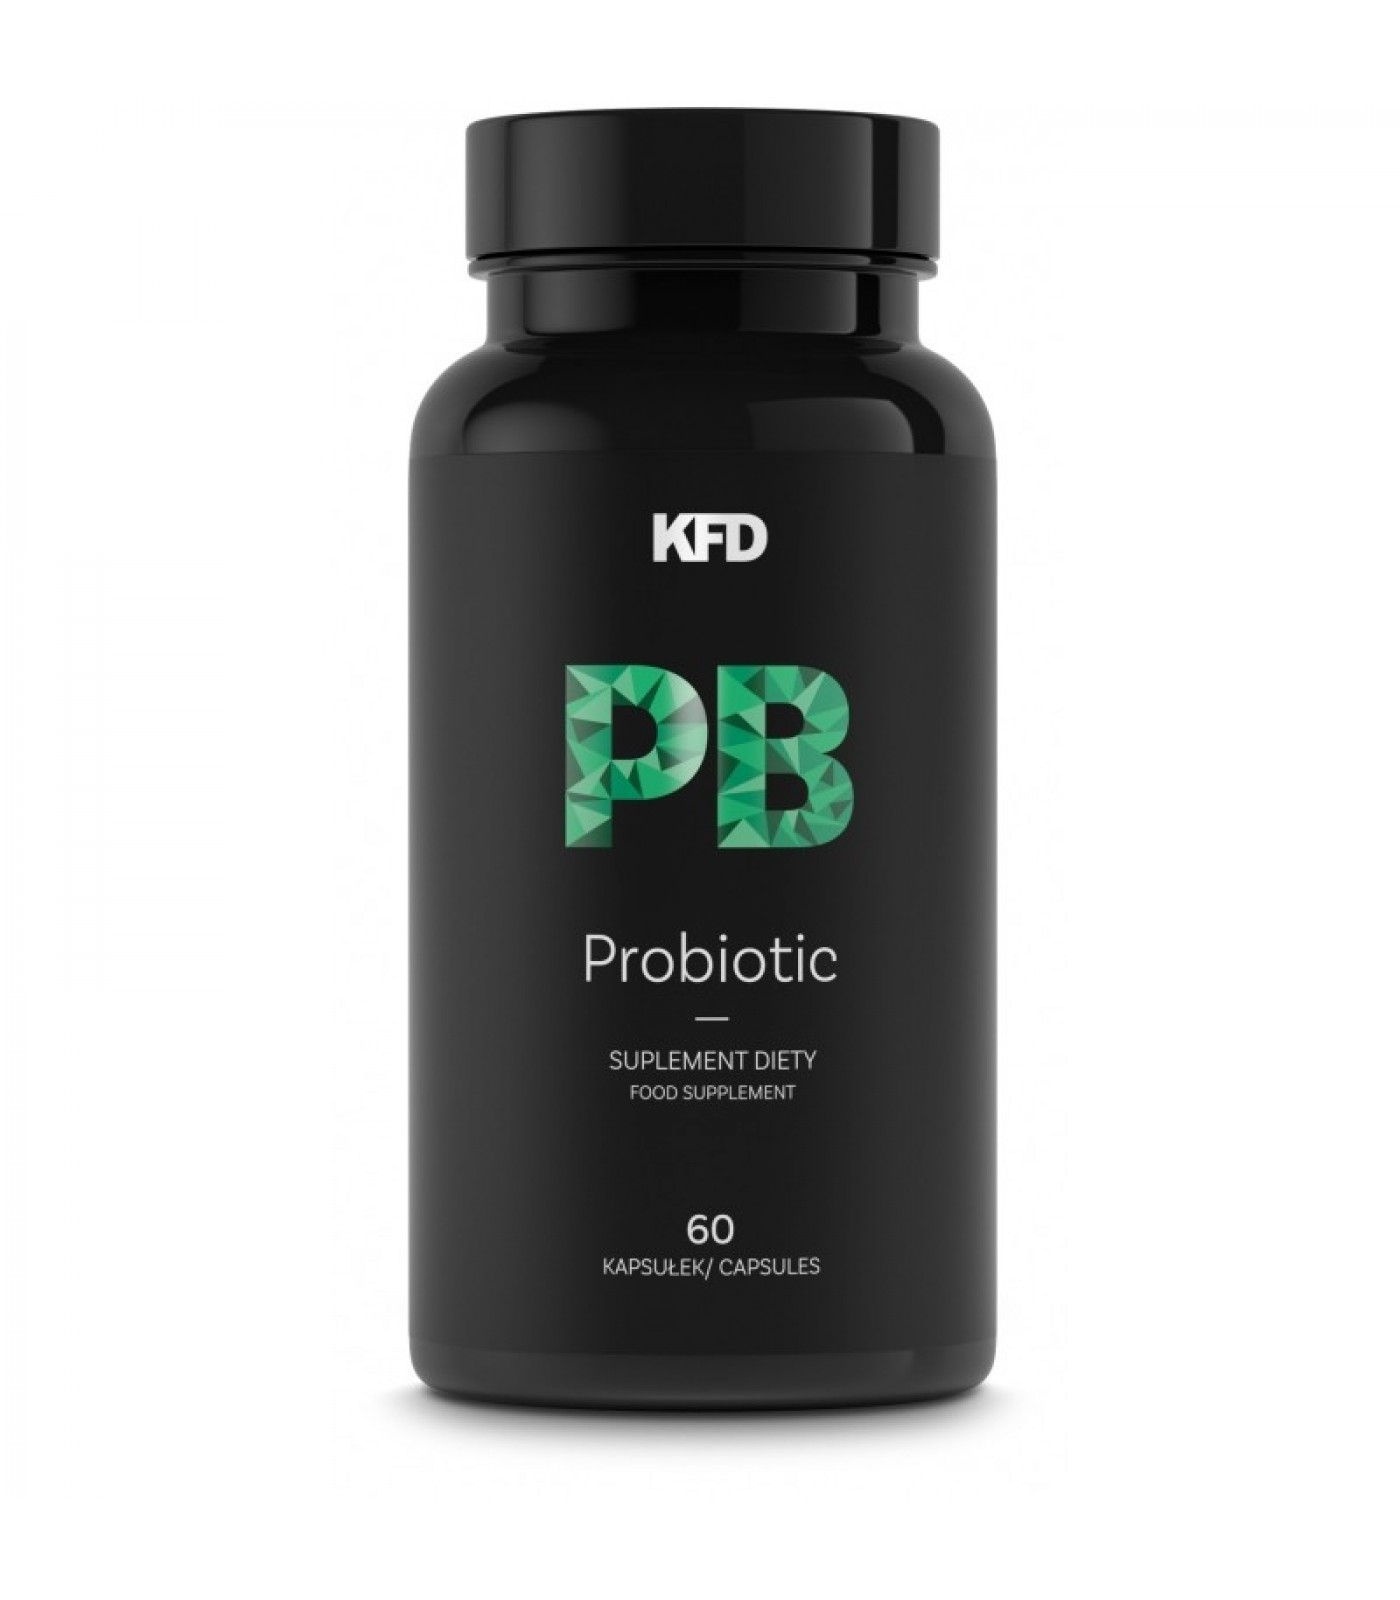 KFD Probiotic